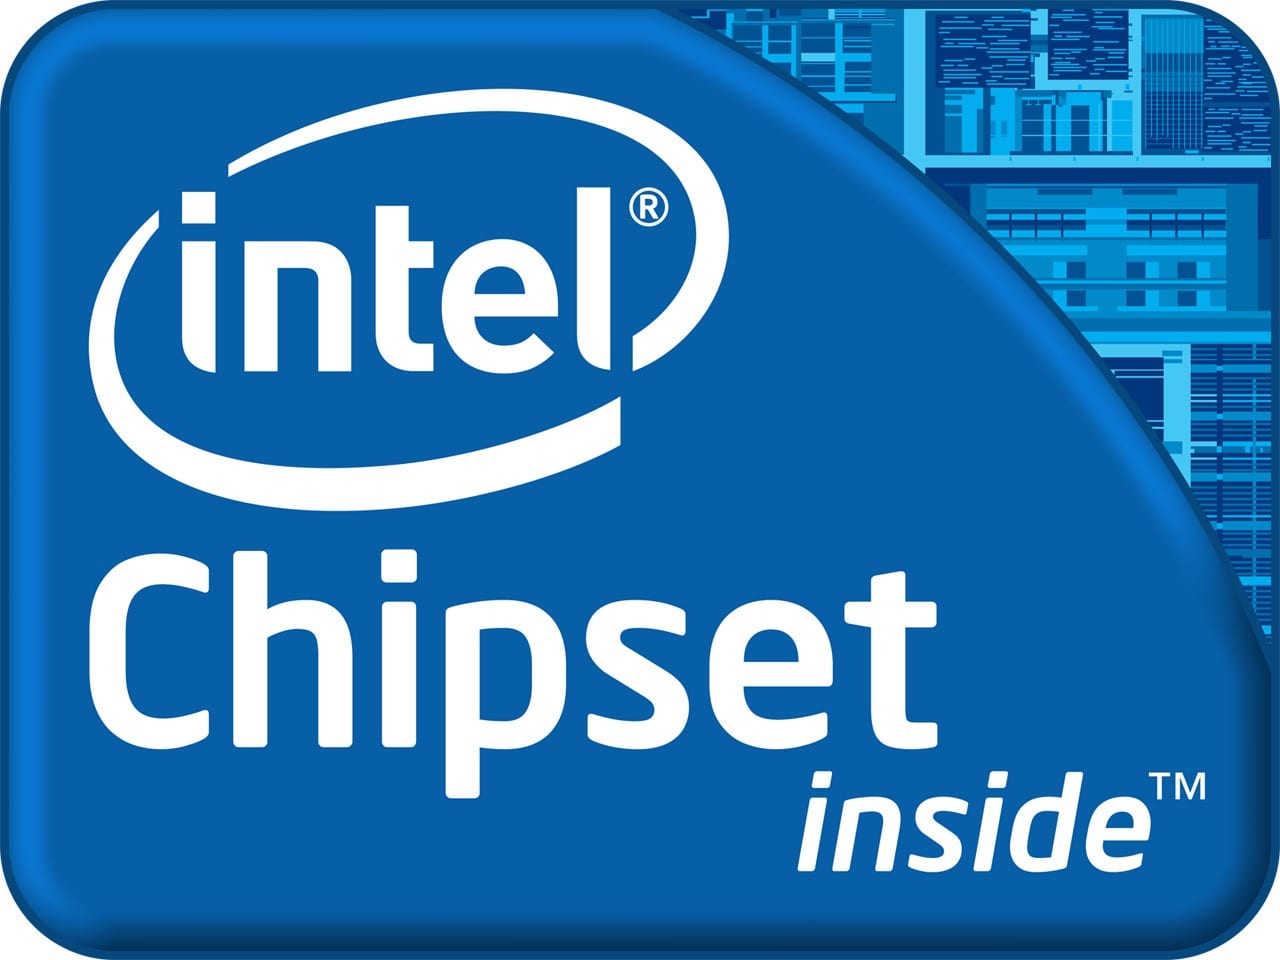 Интел без. Интел. Логотип Intel. Чипсеты Интел. Значок Интел инсайд.